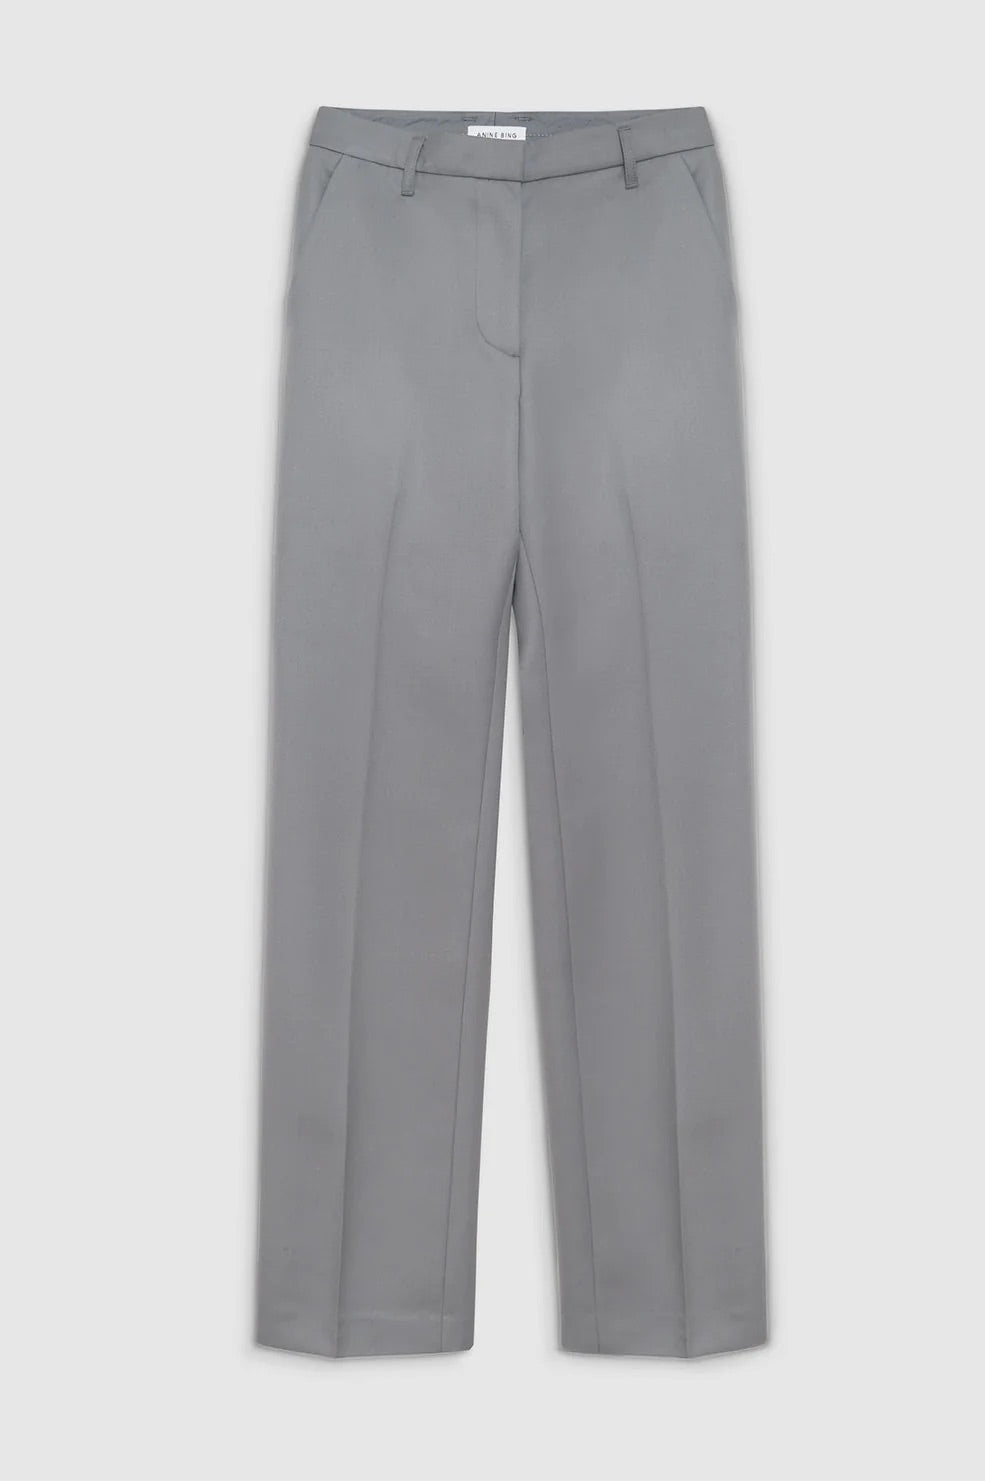 Anine Bing Classic Pant Grey A-03-3139-040